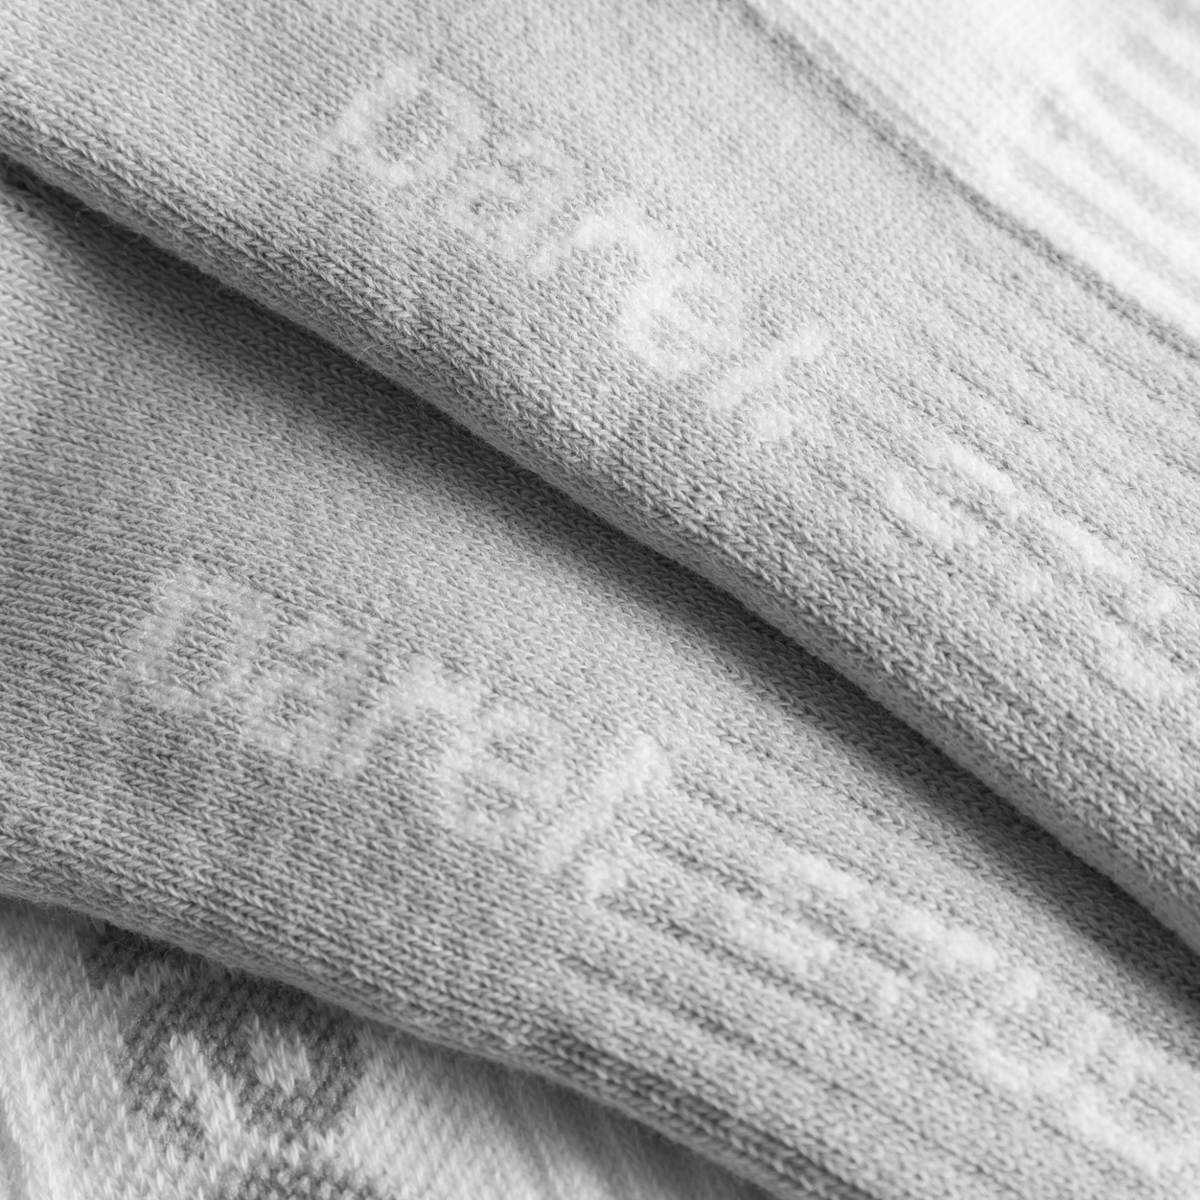 Sport Socks - White/Grey